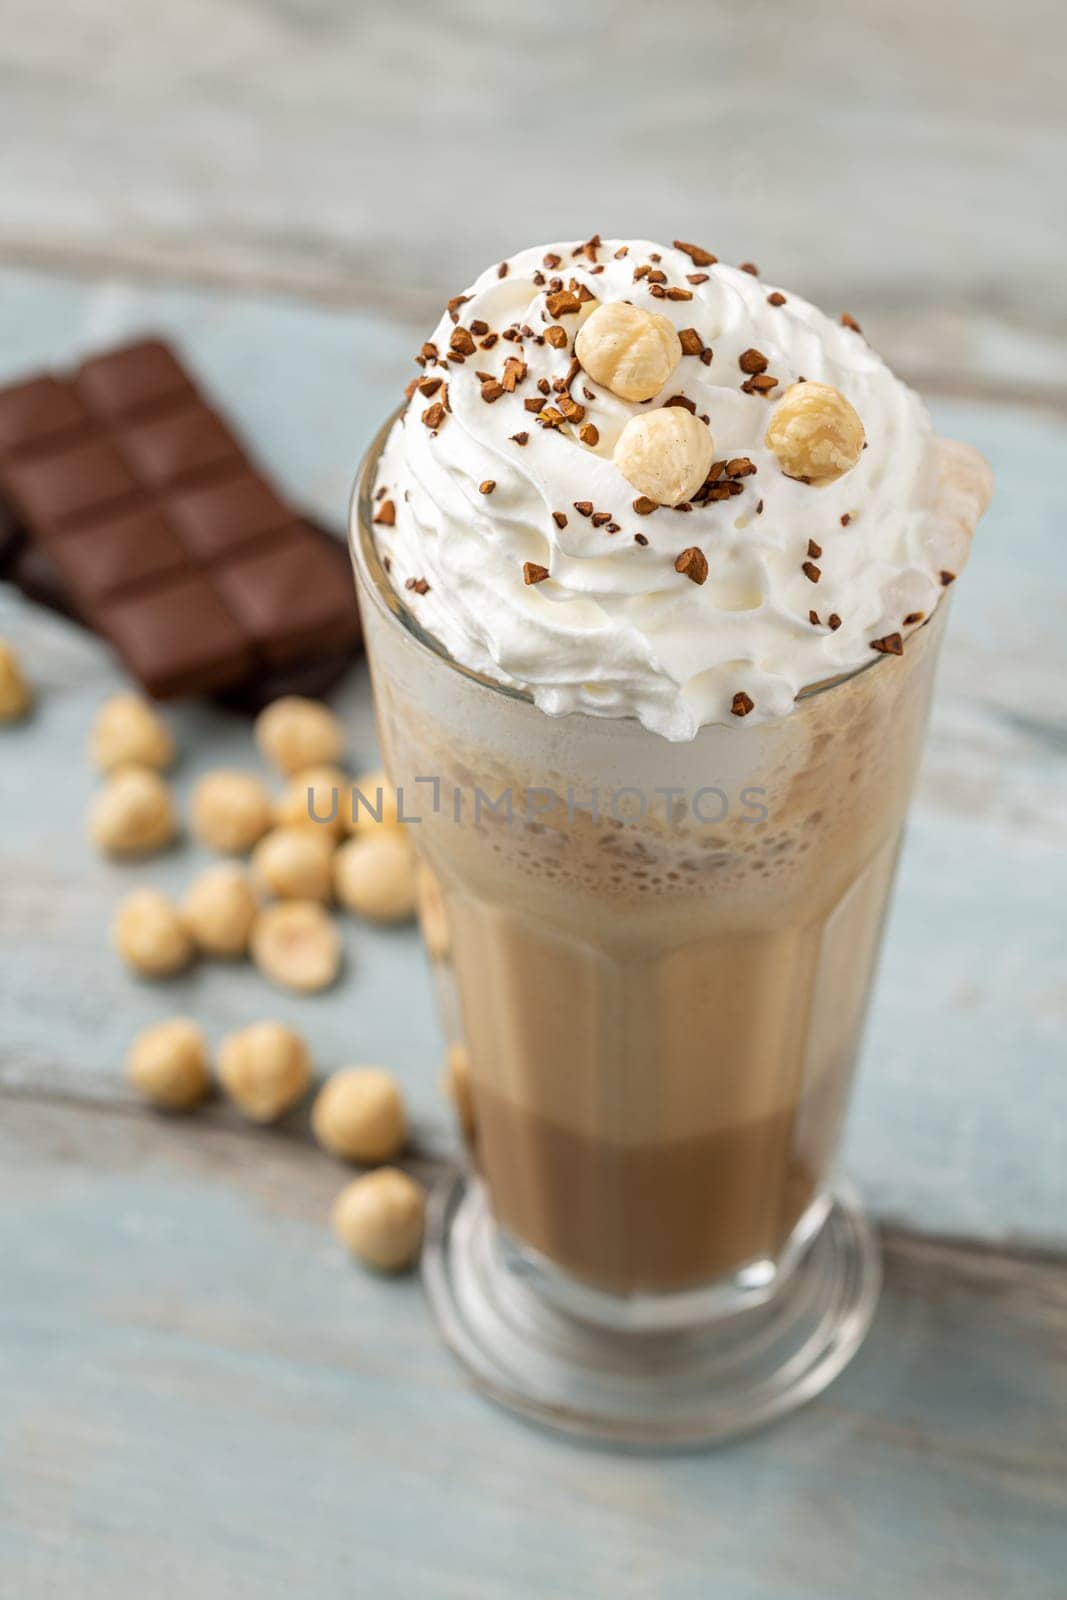 hazelnut and chocolate milkshake with coffee sprinkled on top by Sonat